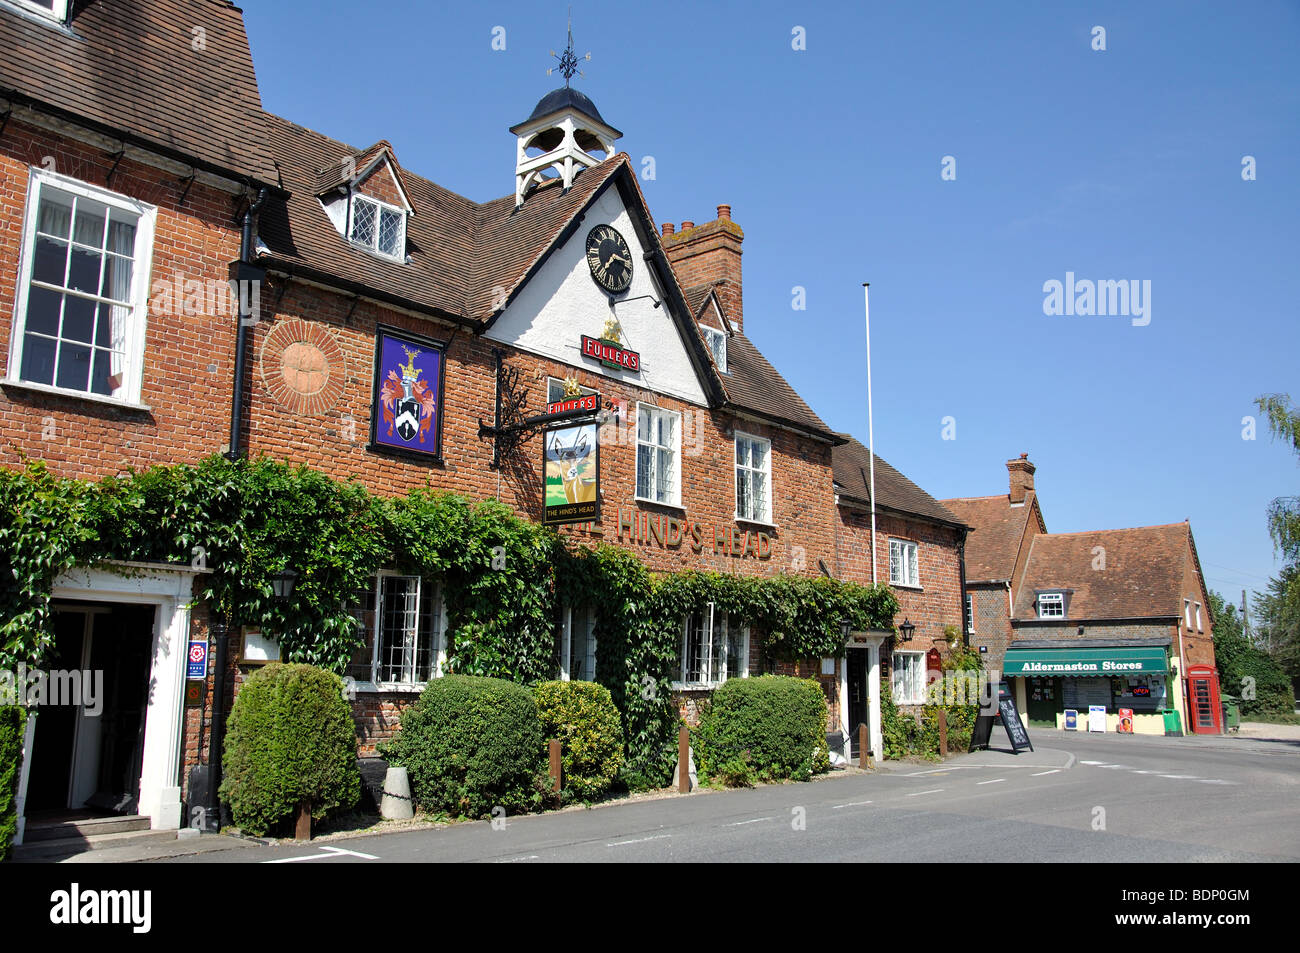 The Hind's head Pub, Wasing Lane, Aldermaston, Berkshire, England, United Kingdom Stock Photo